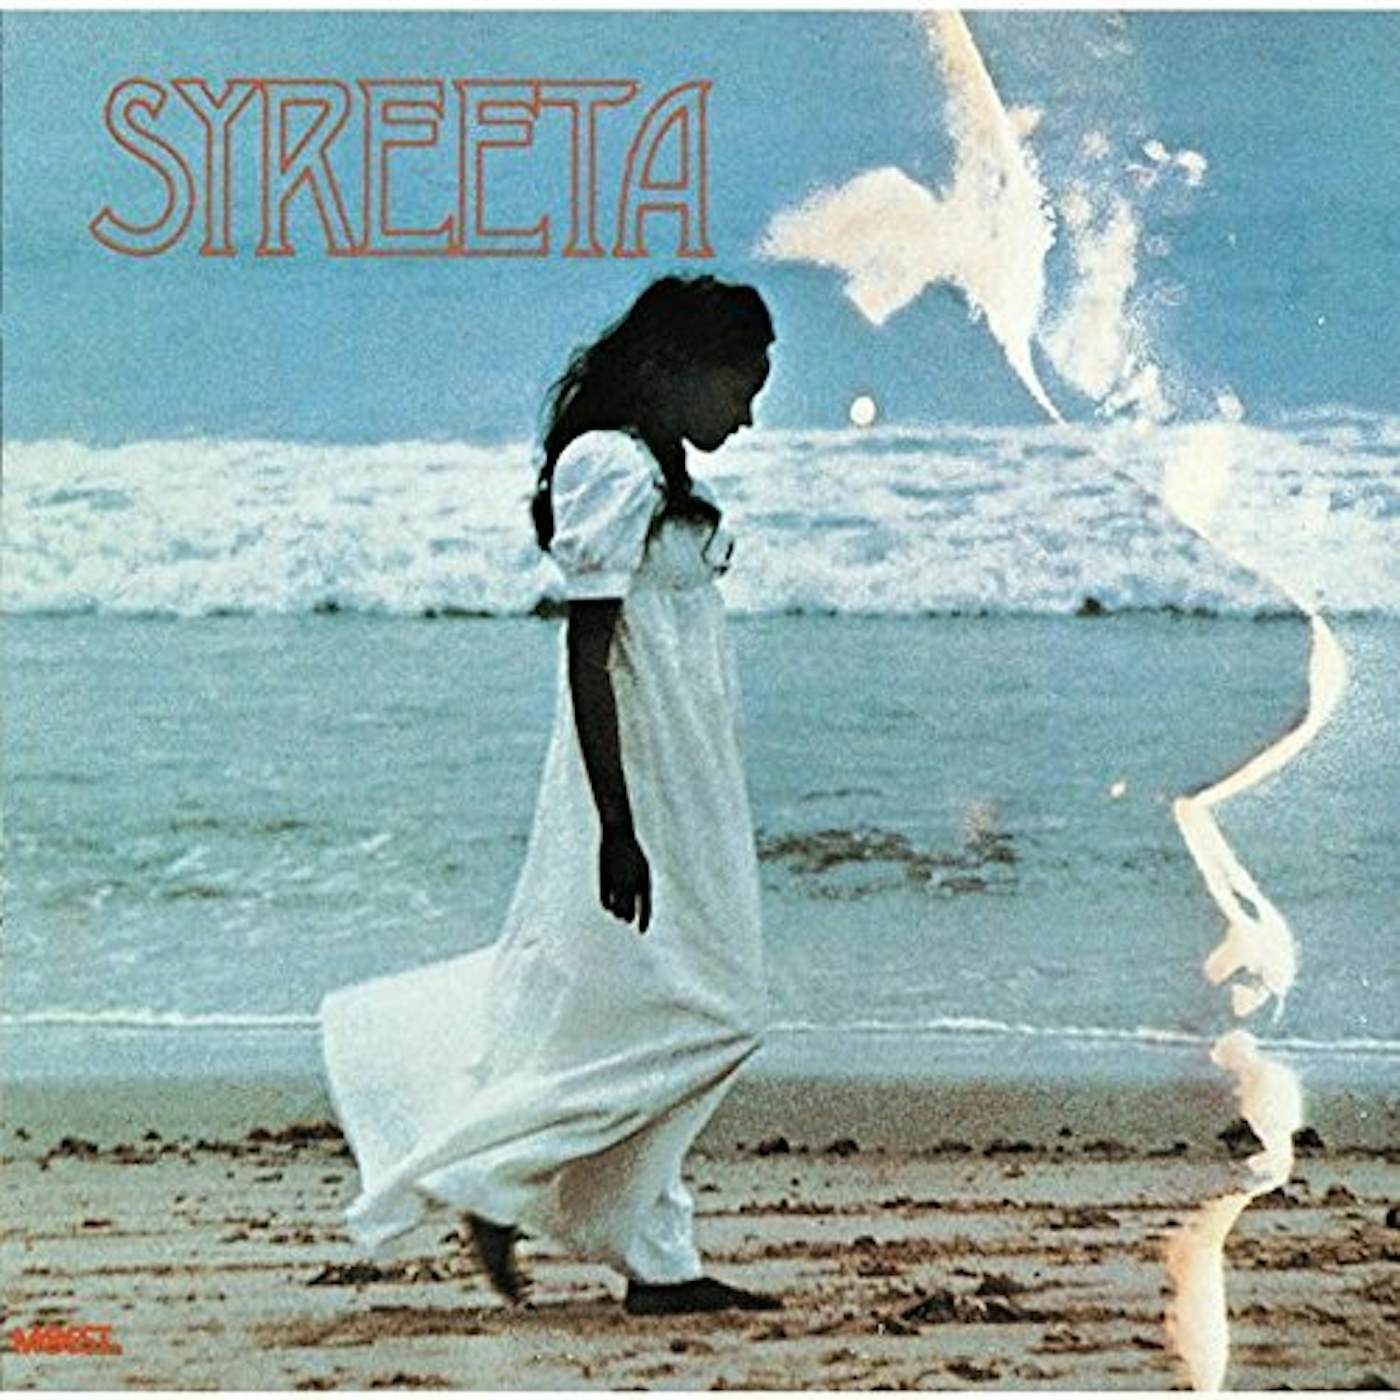 Syreeta Vinyl Record